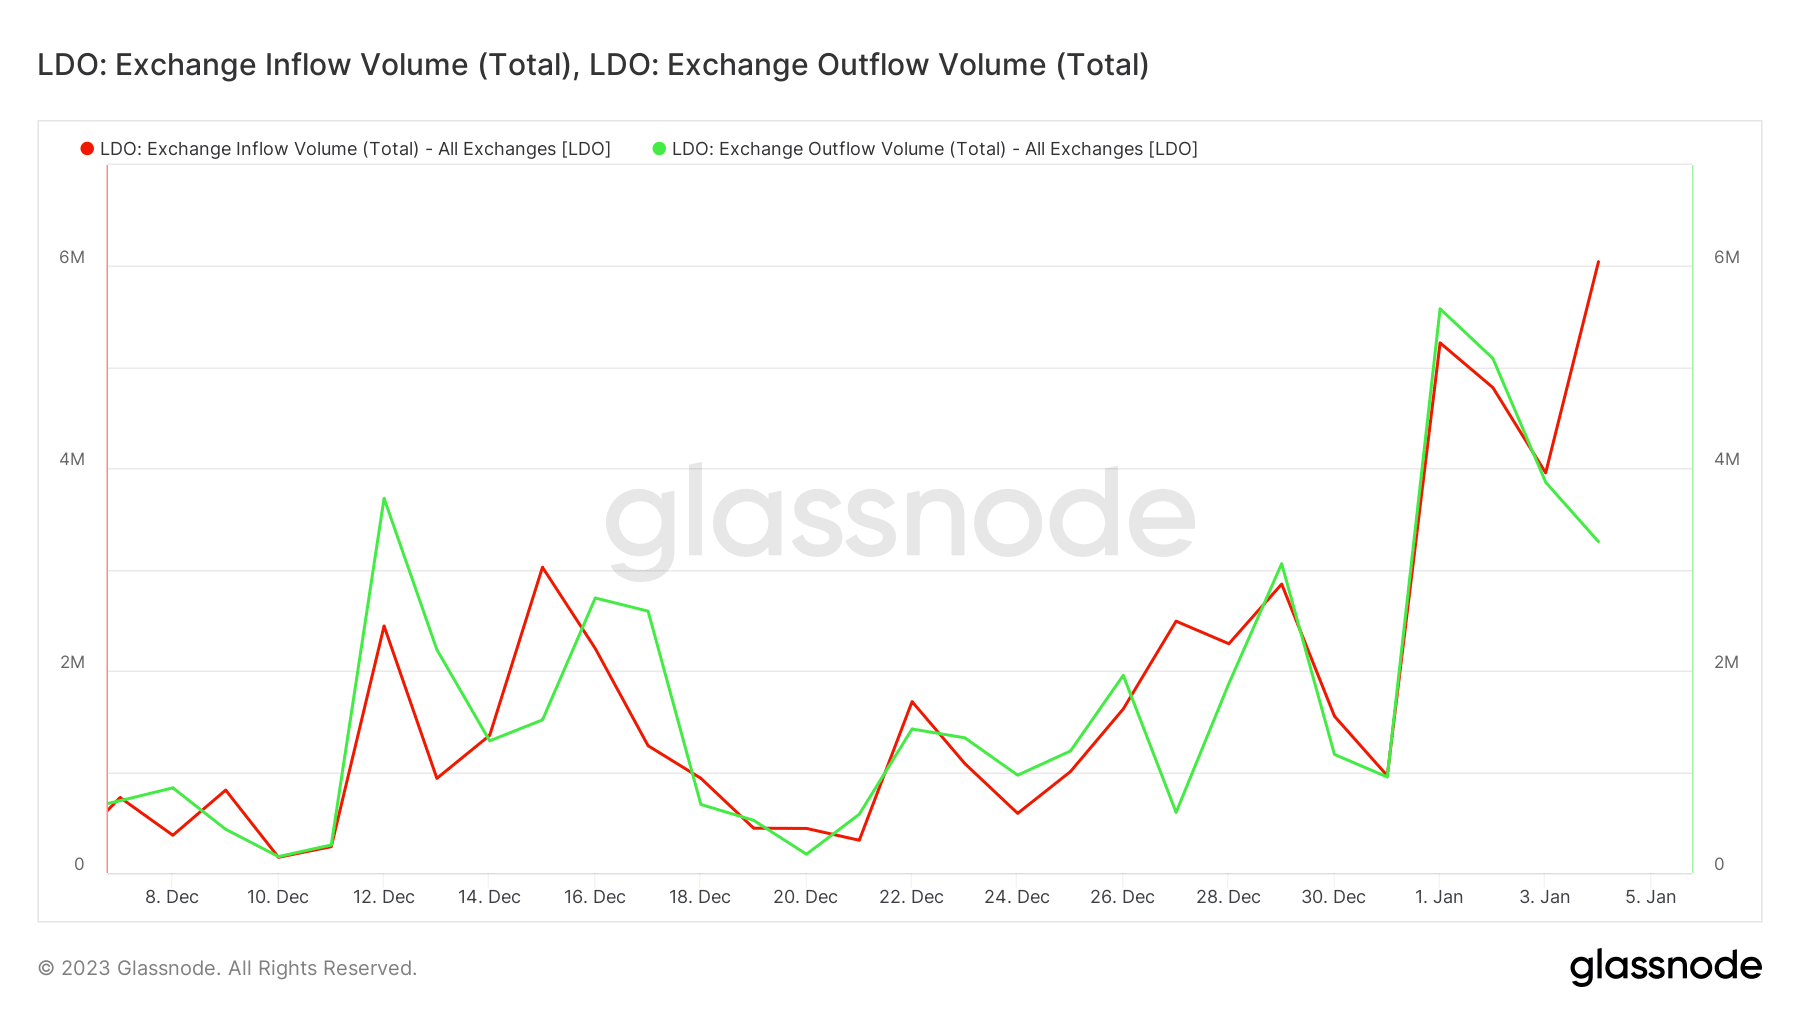 LDO exchange flows